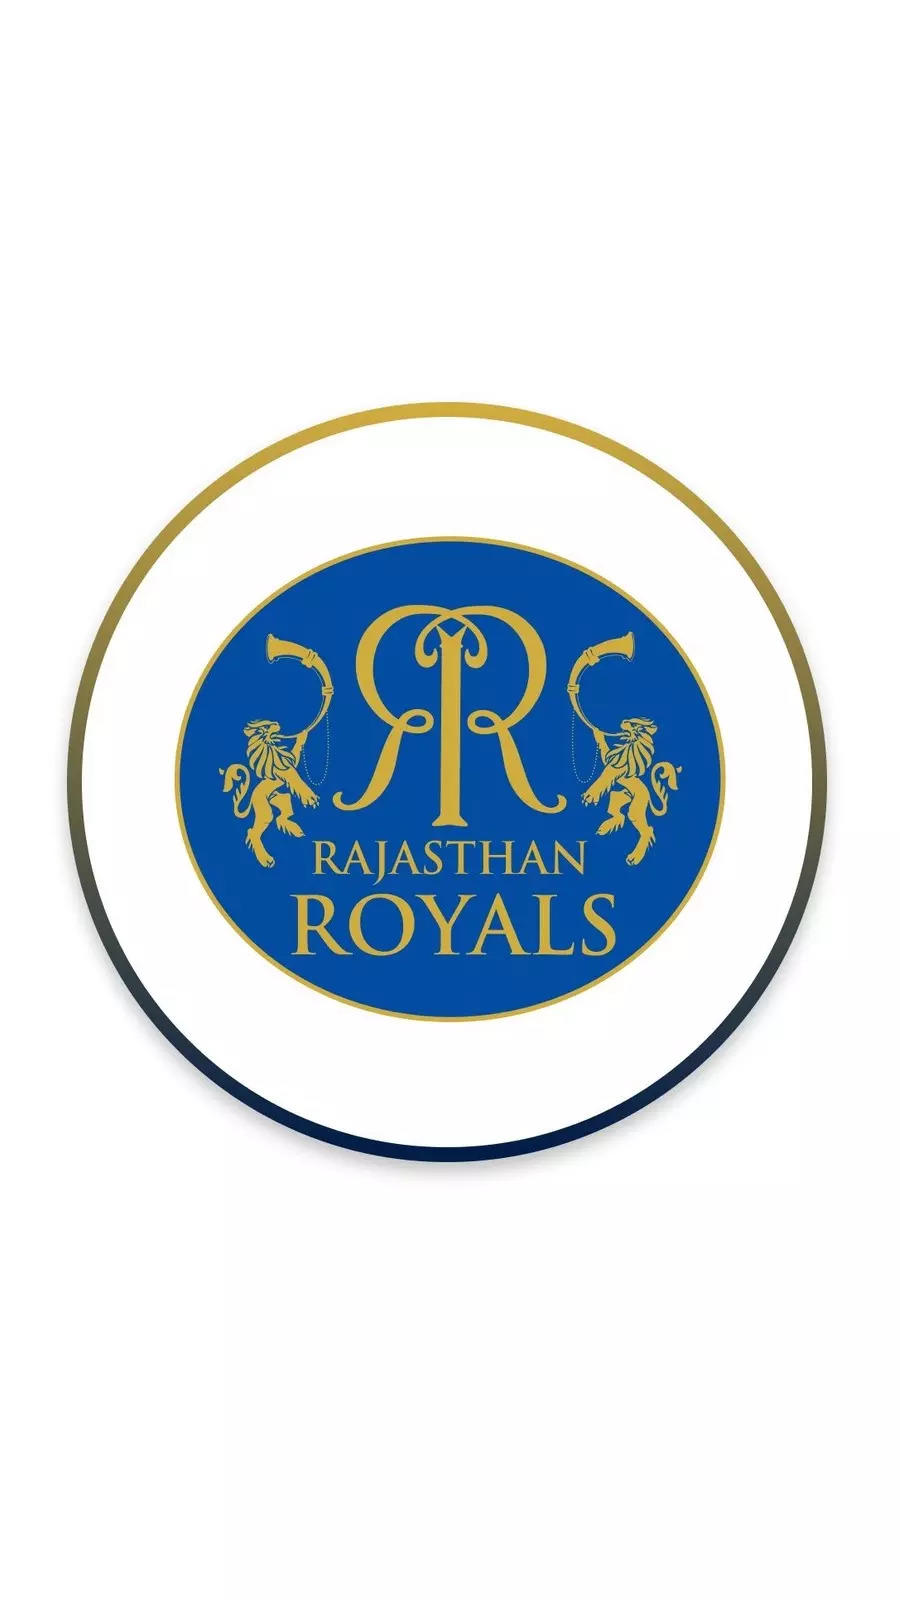 Download Rajasthan Royals Logo PNG and Vector (PDF, SVG, Ai, EPS) Free